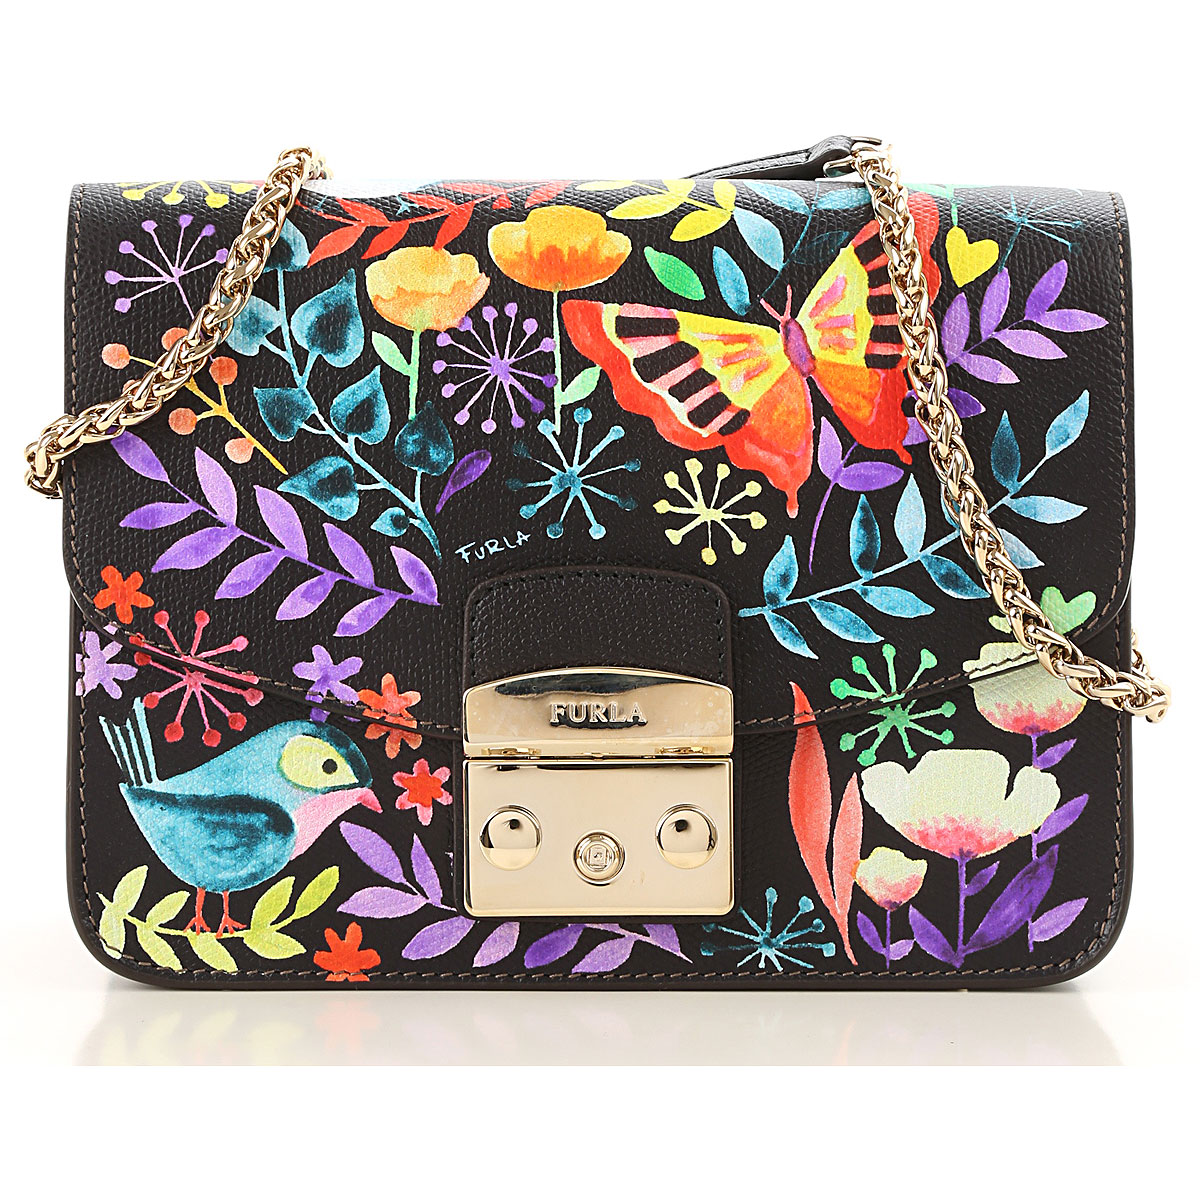 Handbags Furla, Style code: 962708-bnf8-h96